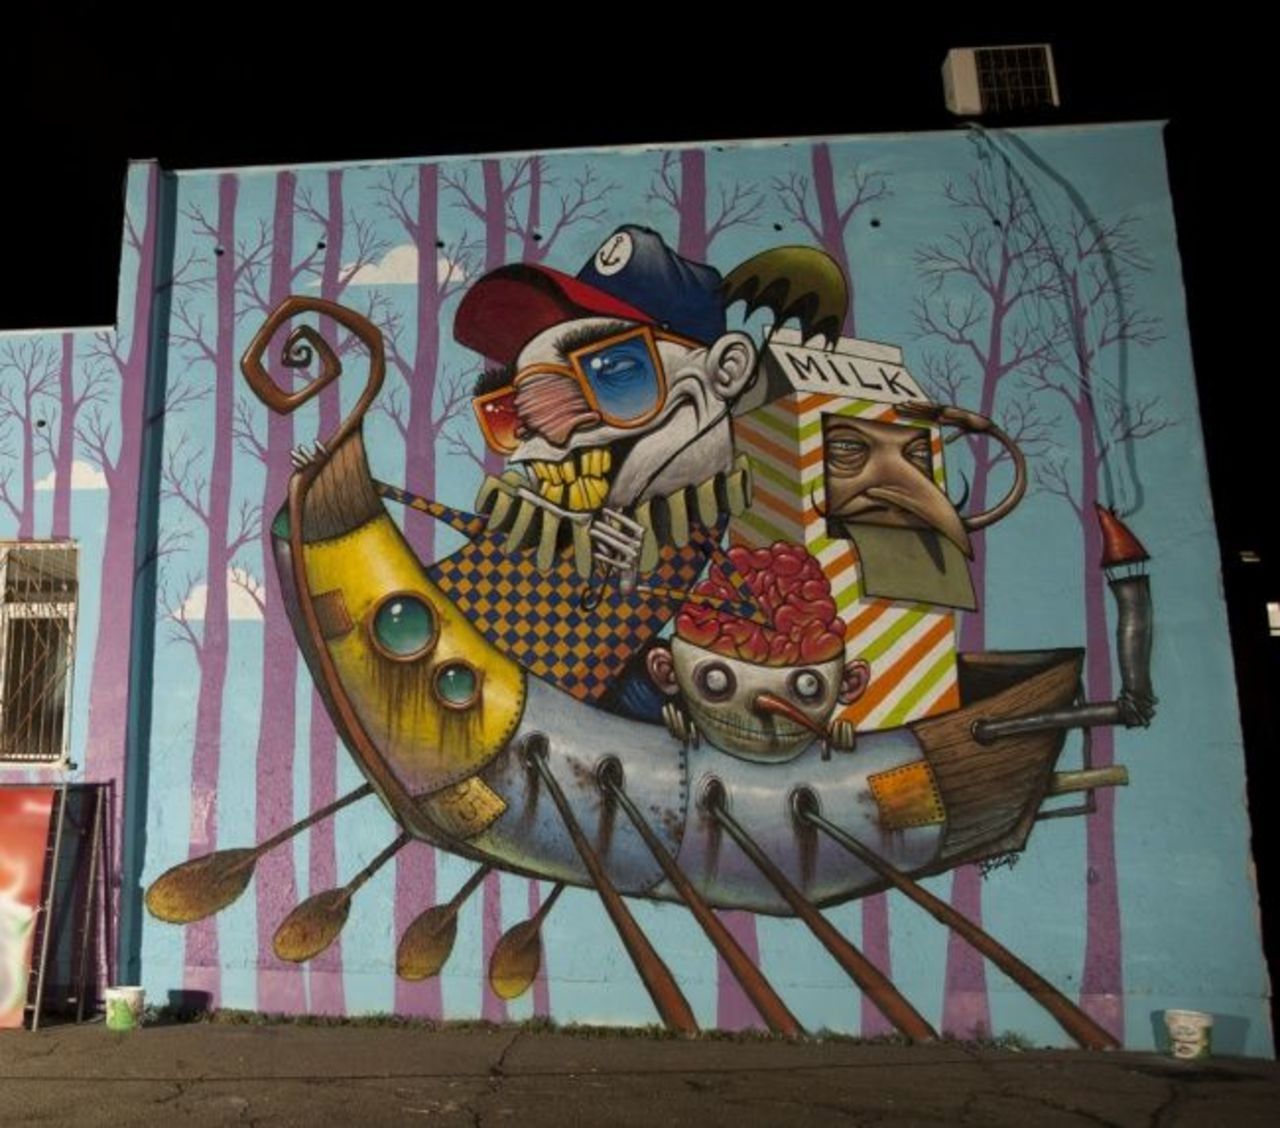 Bozko
Sofia,  #Bulgaria

#Graffiti #StreetArt #Mural #painting #Urban #Art http://t.co/uMXyKNEIOS